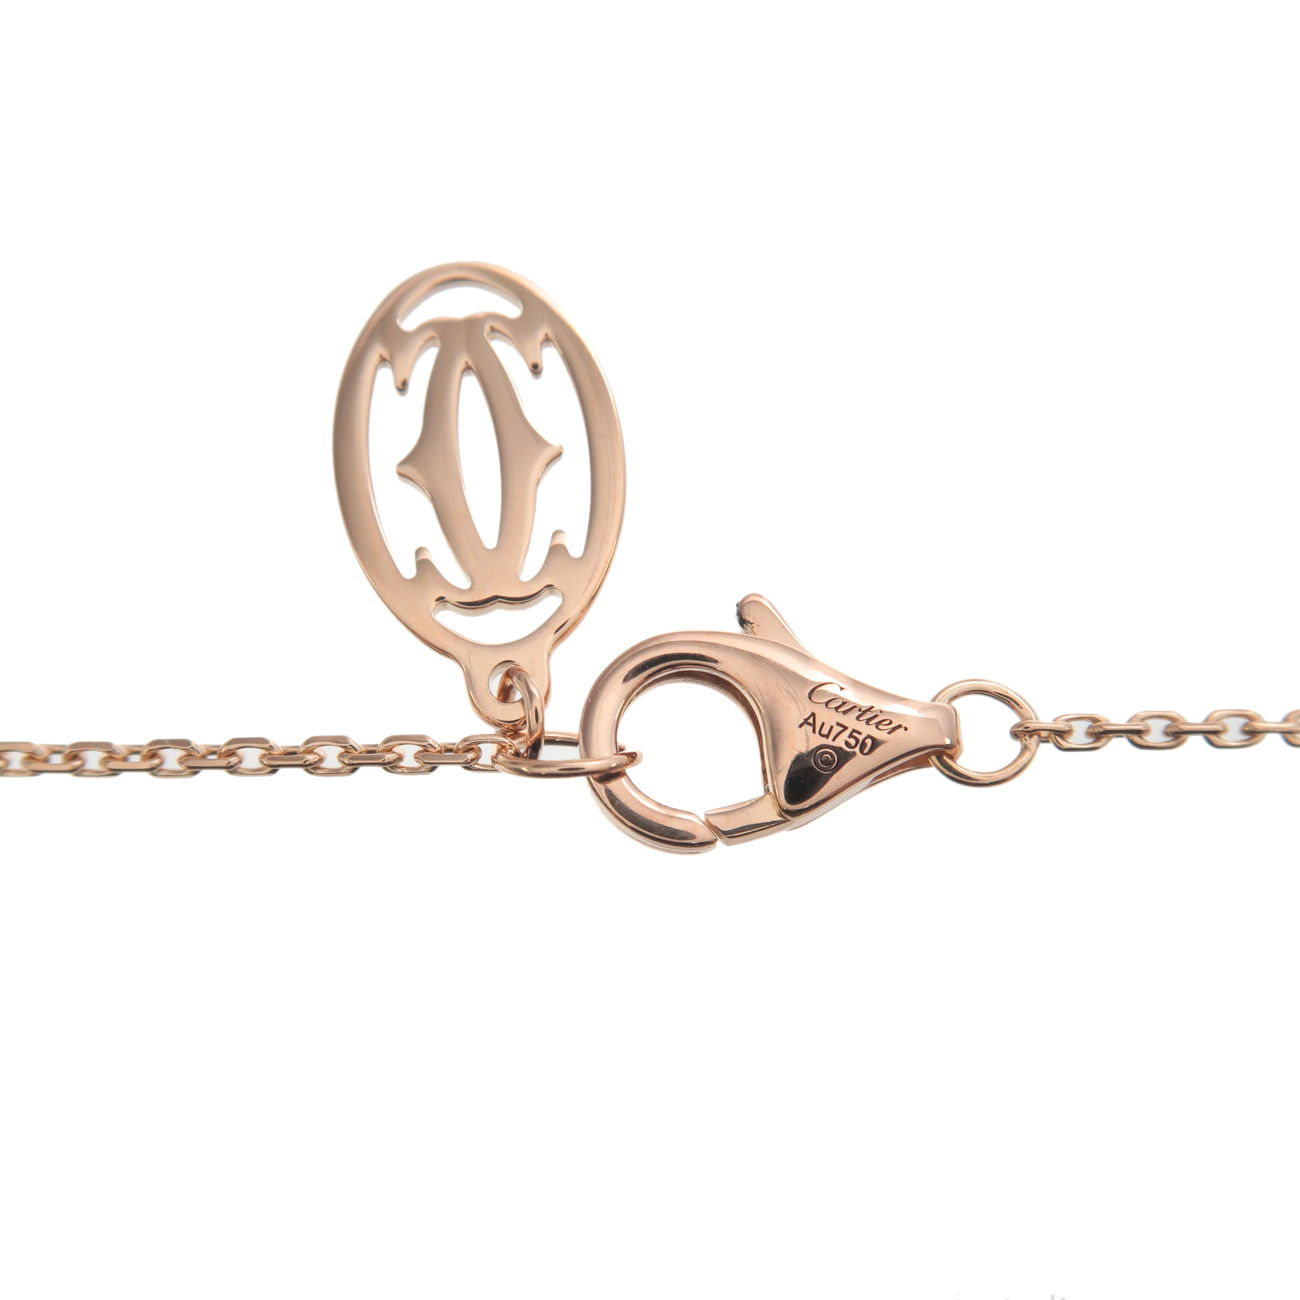 Cartier-Symbol-Cross-Pink-Sapphire-Necklace-K18-750-Rose-Gold